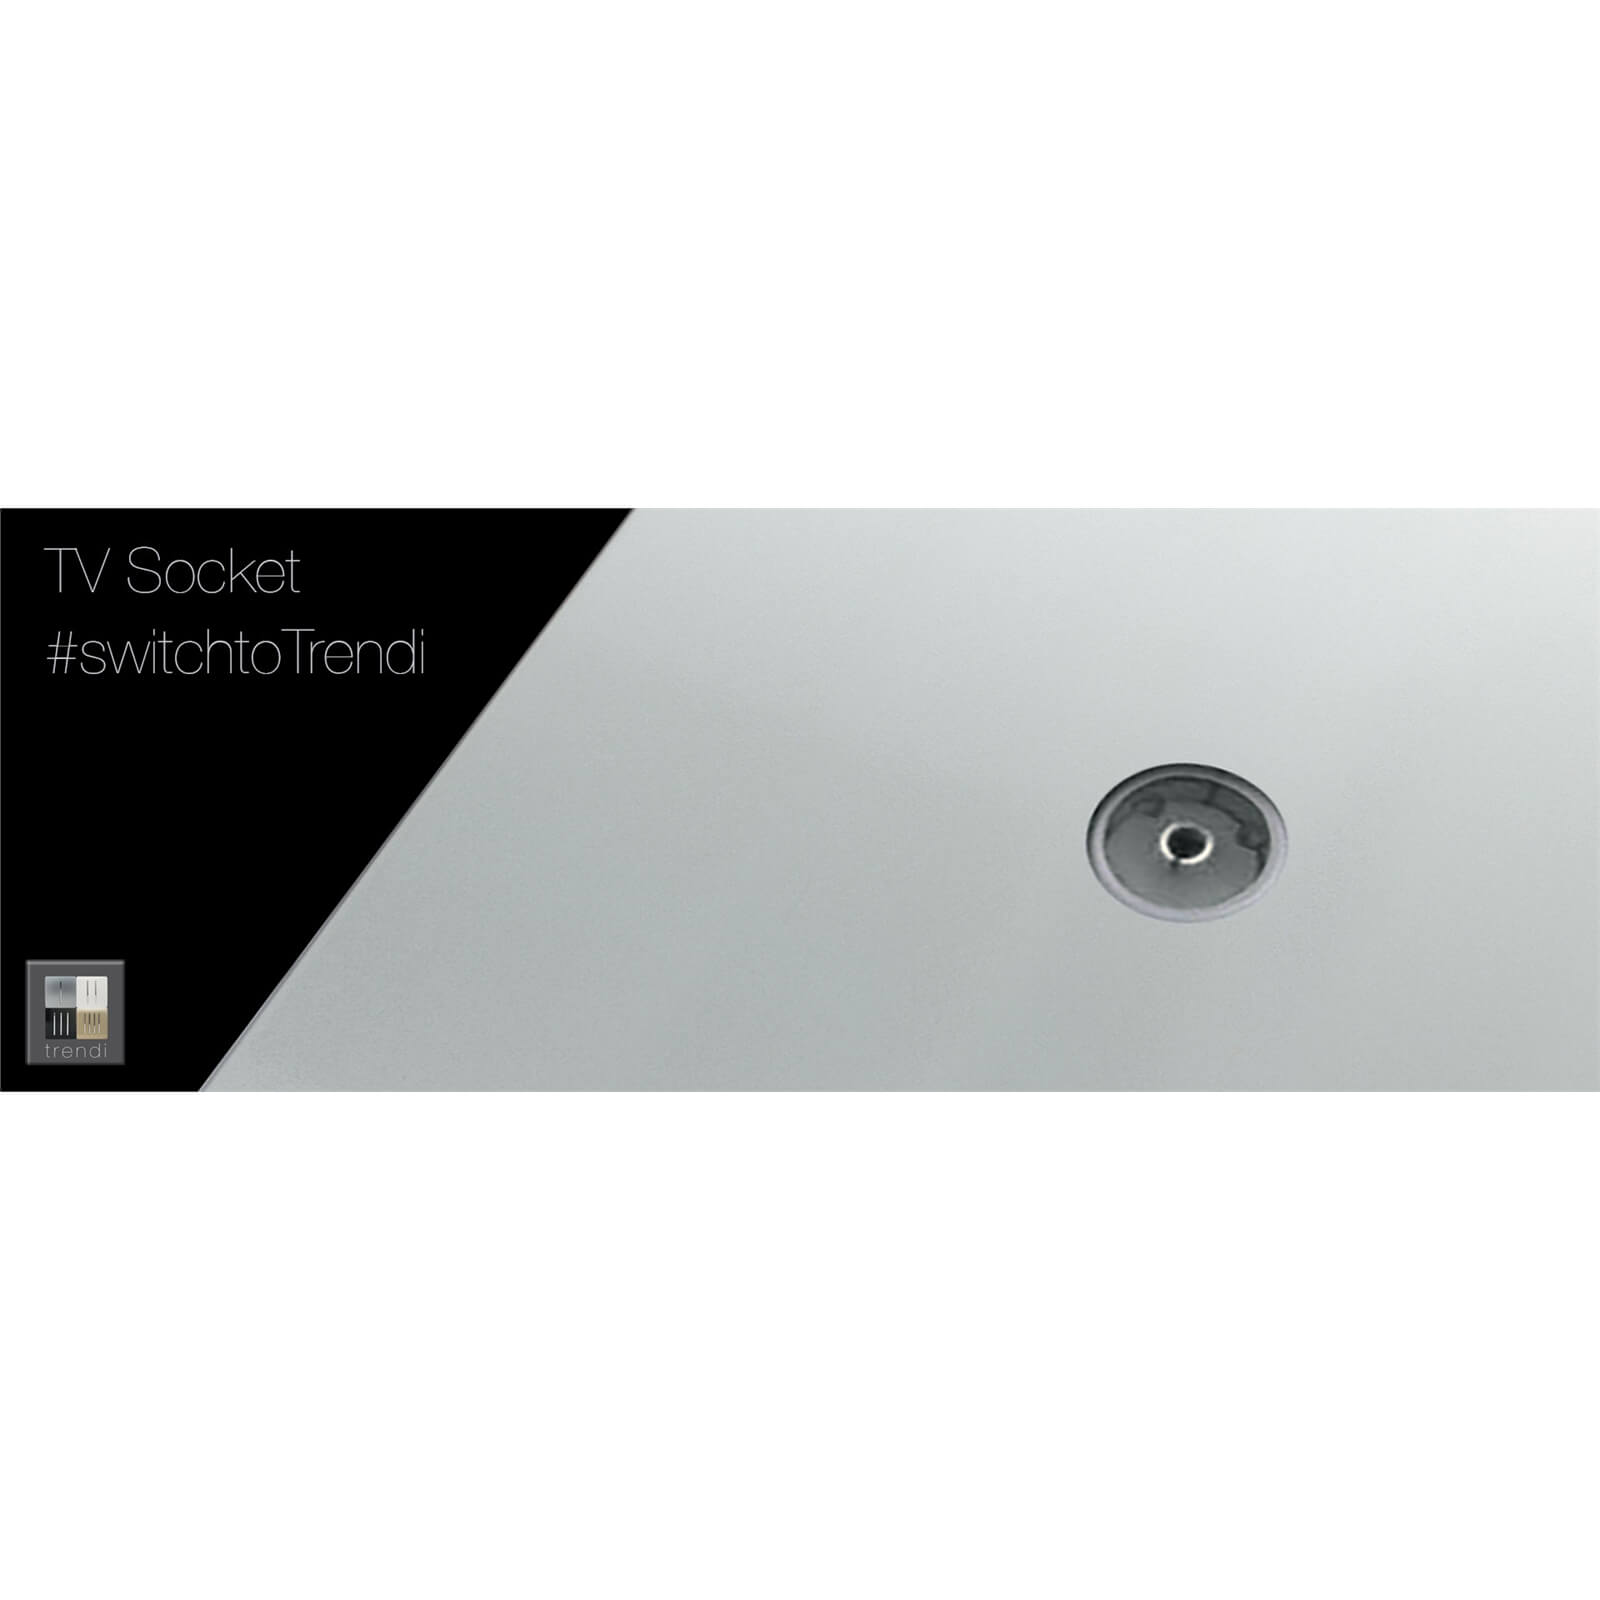 Trendi Switch TV Co-axial Socket in Screwless White